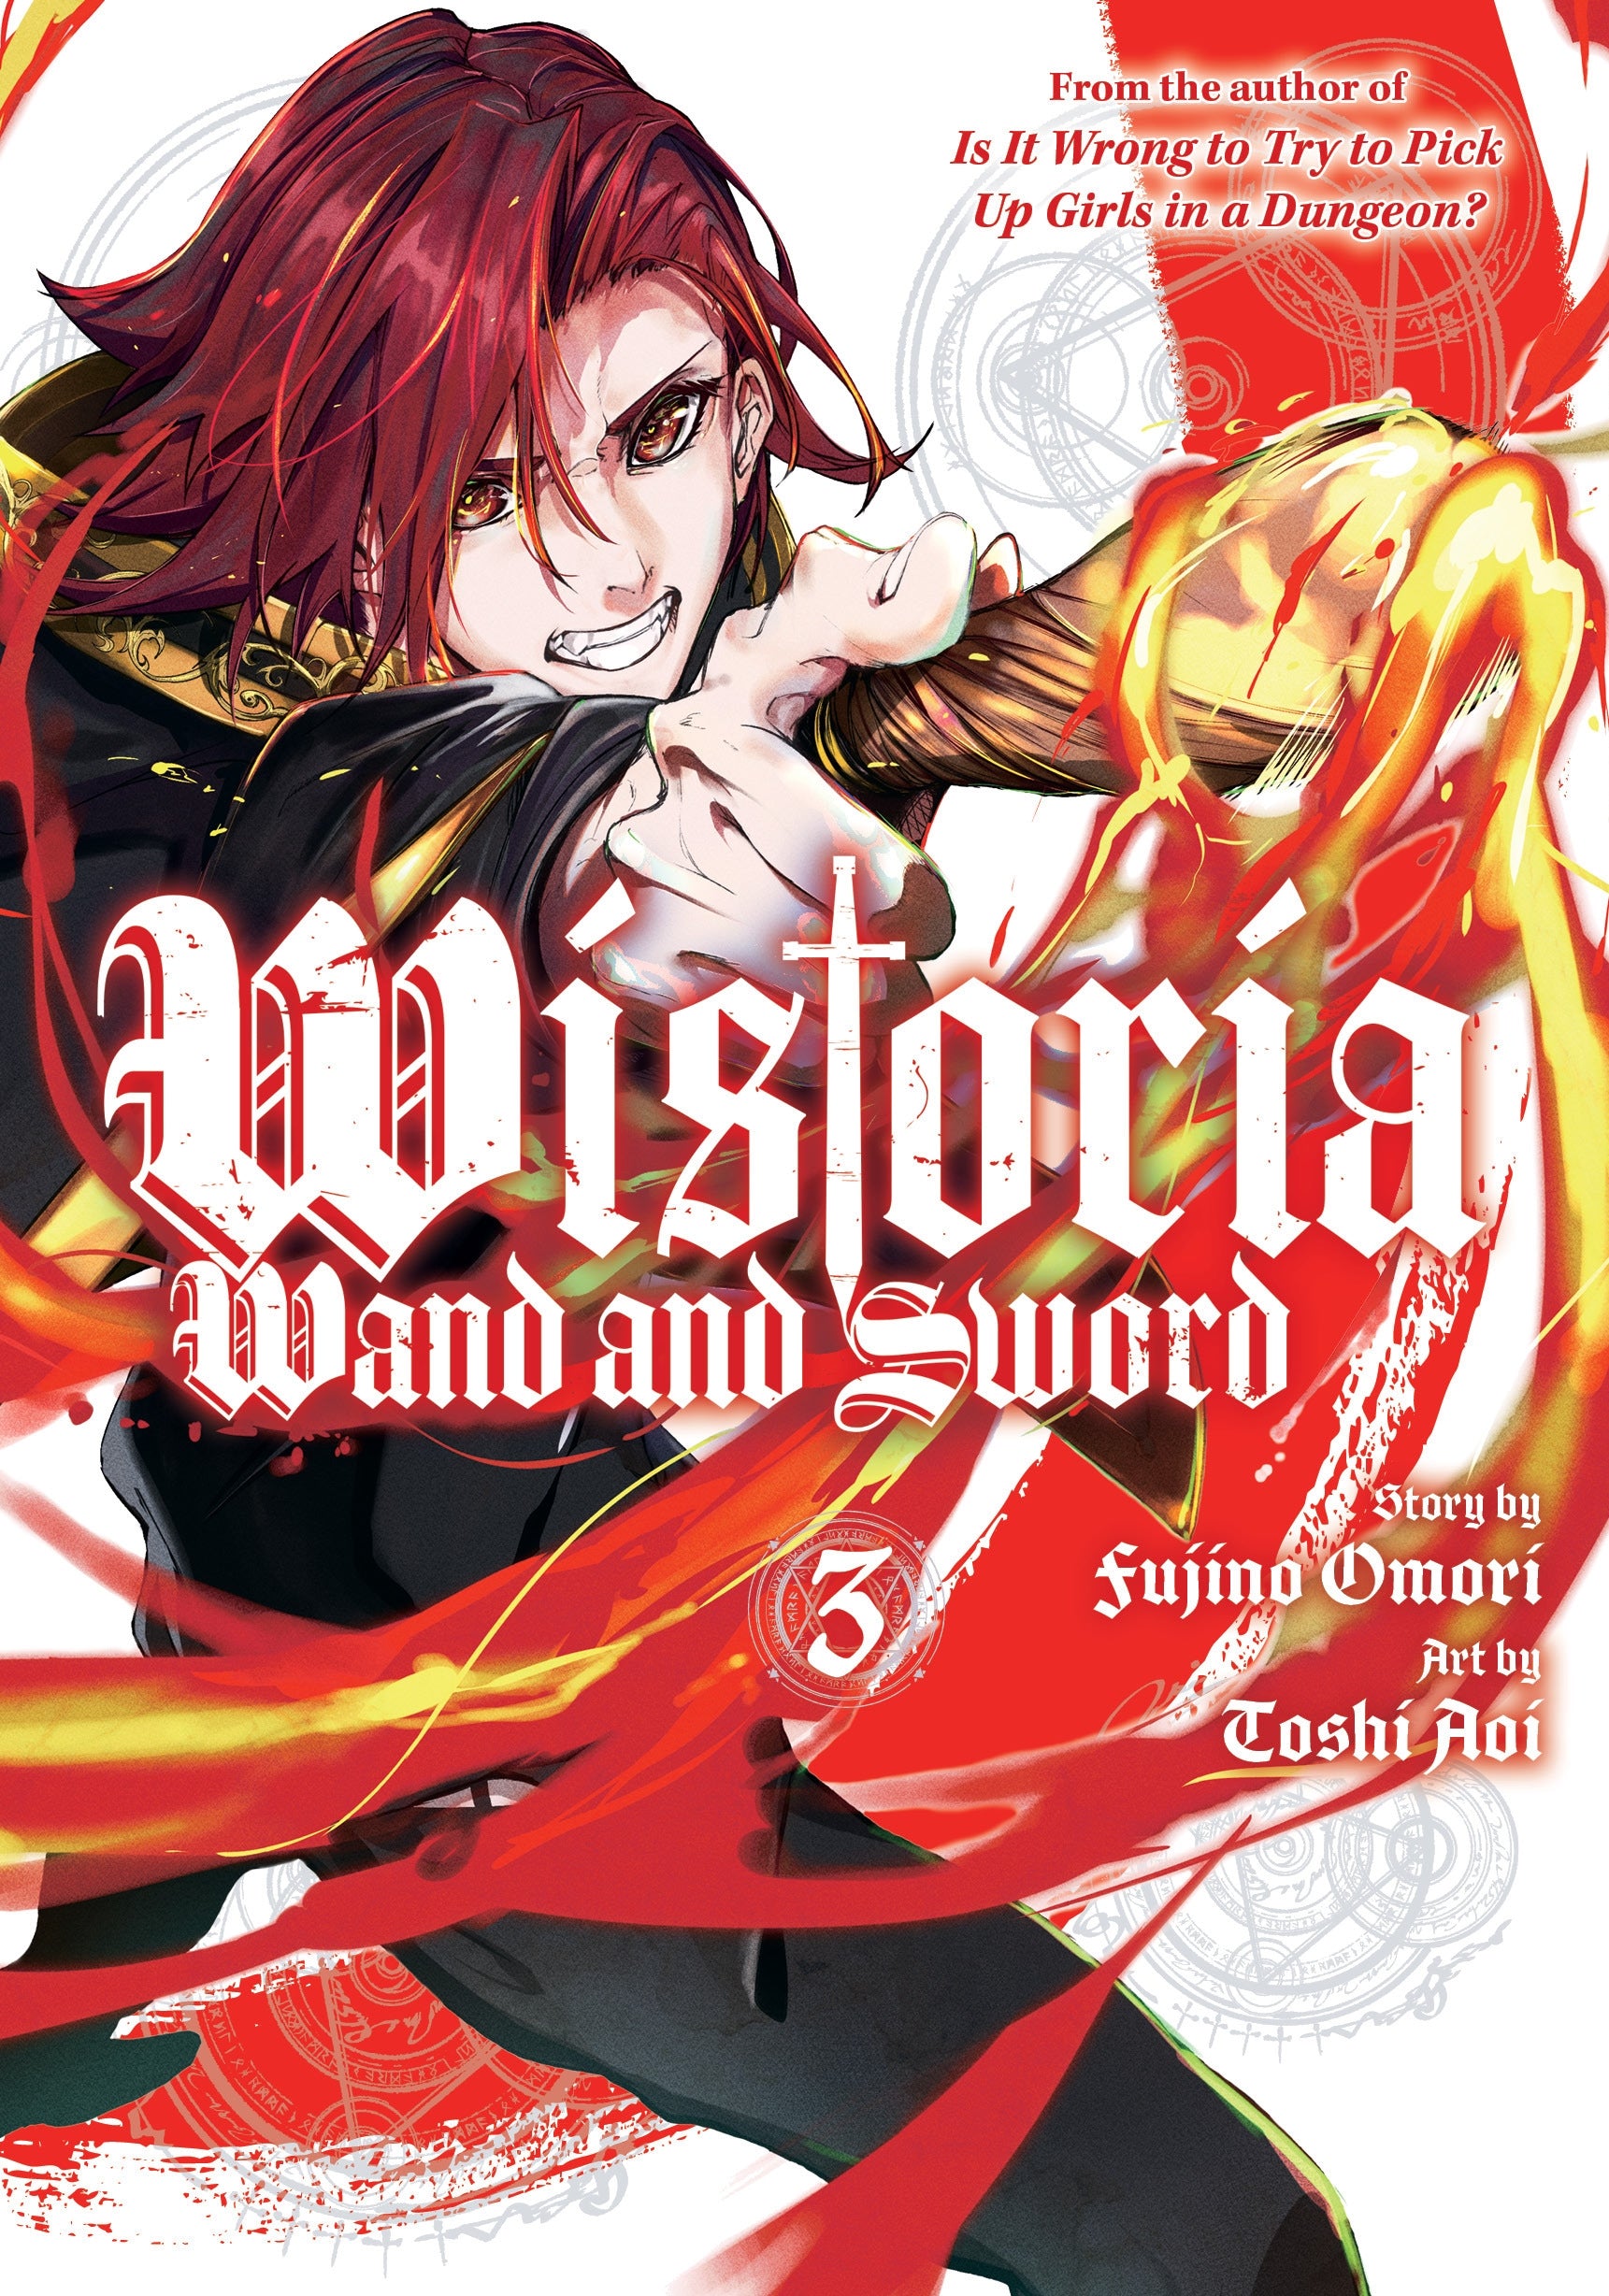 Wistoria Wand and Sword, Vol. 3